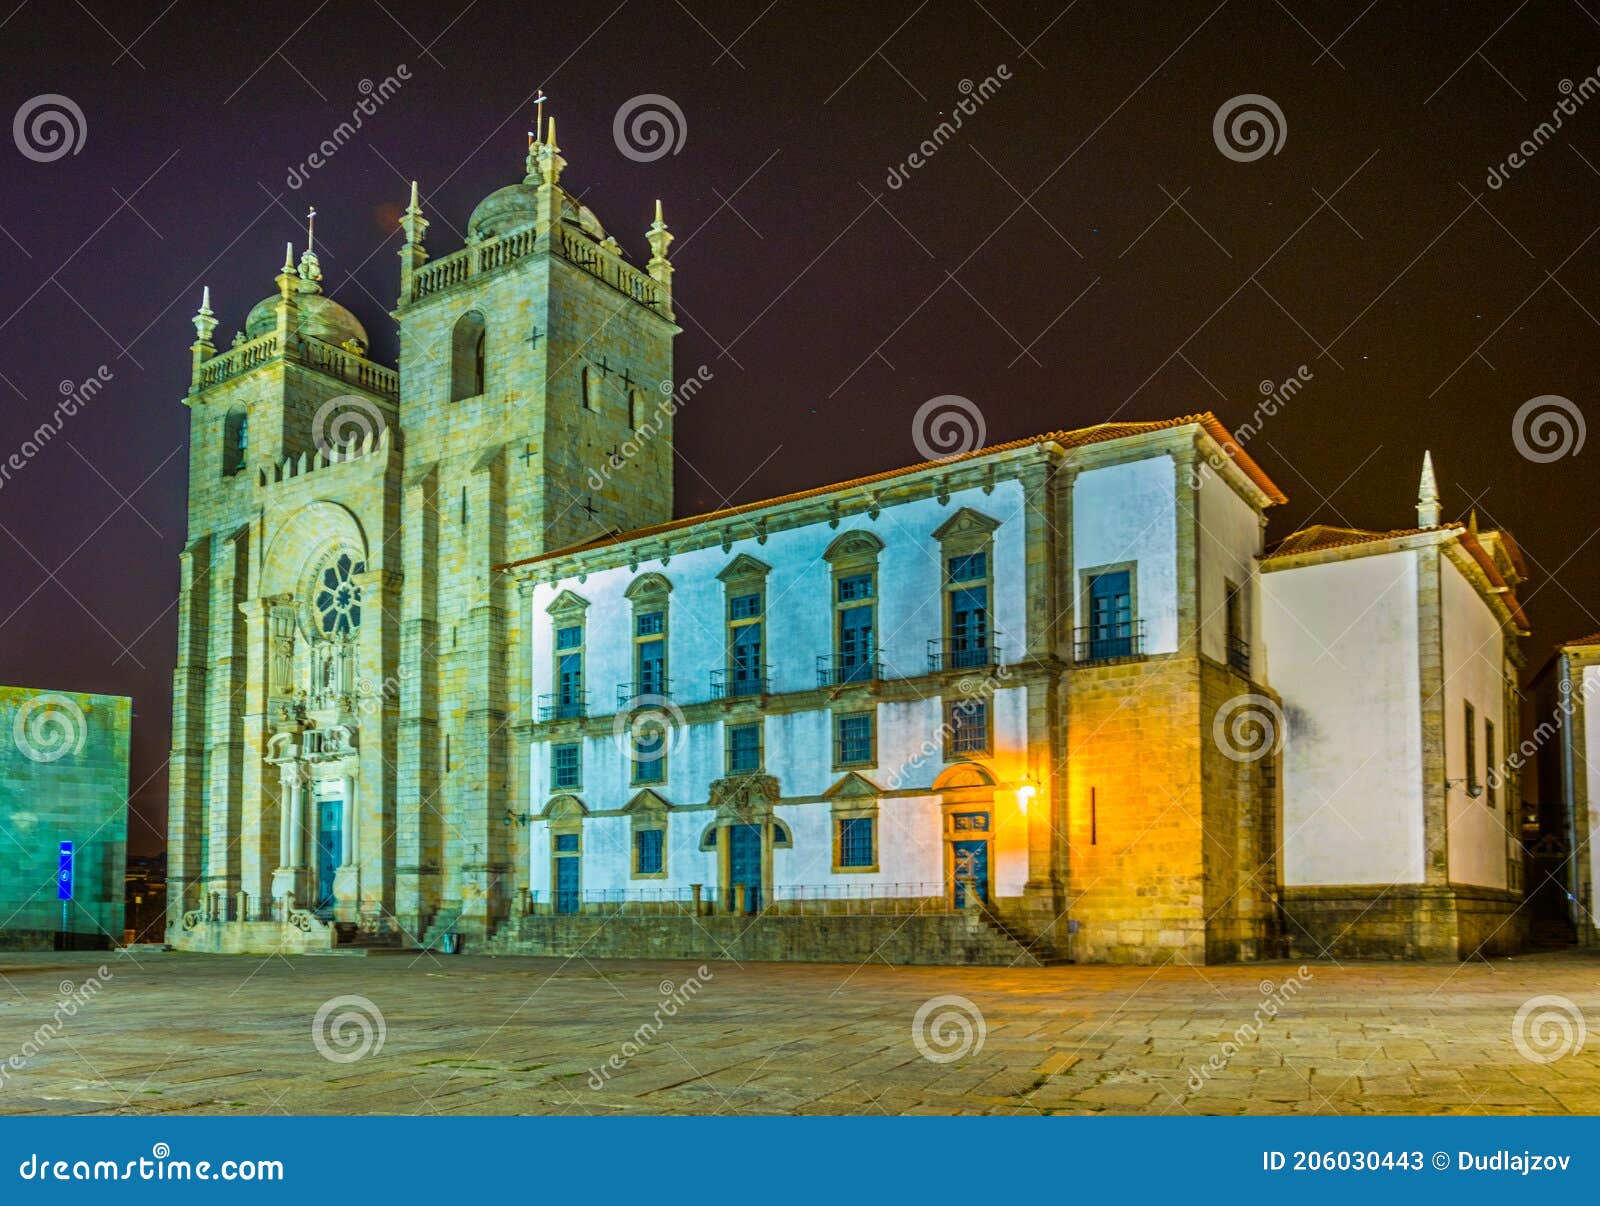 se - the cathedral of porto, portugal